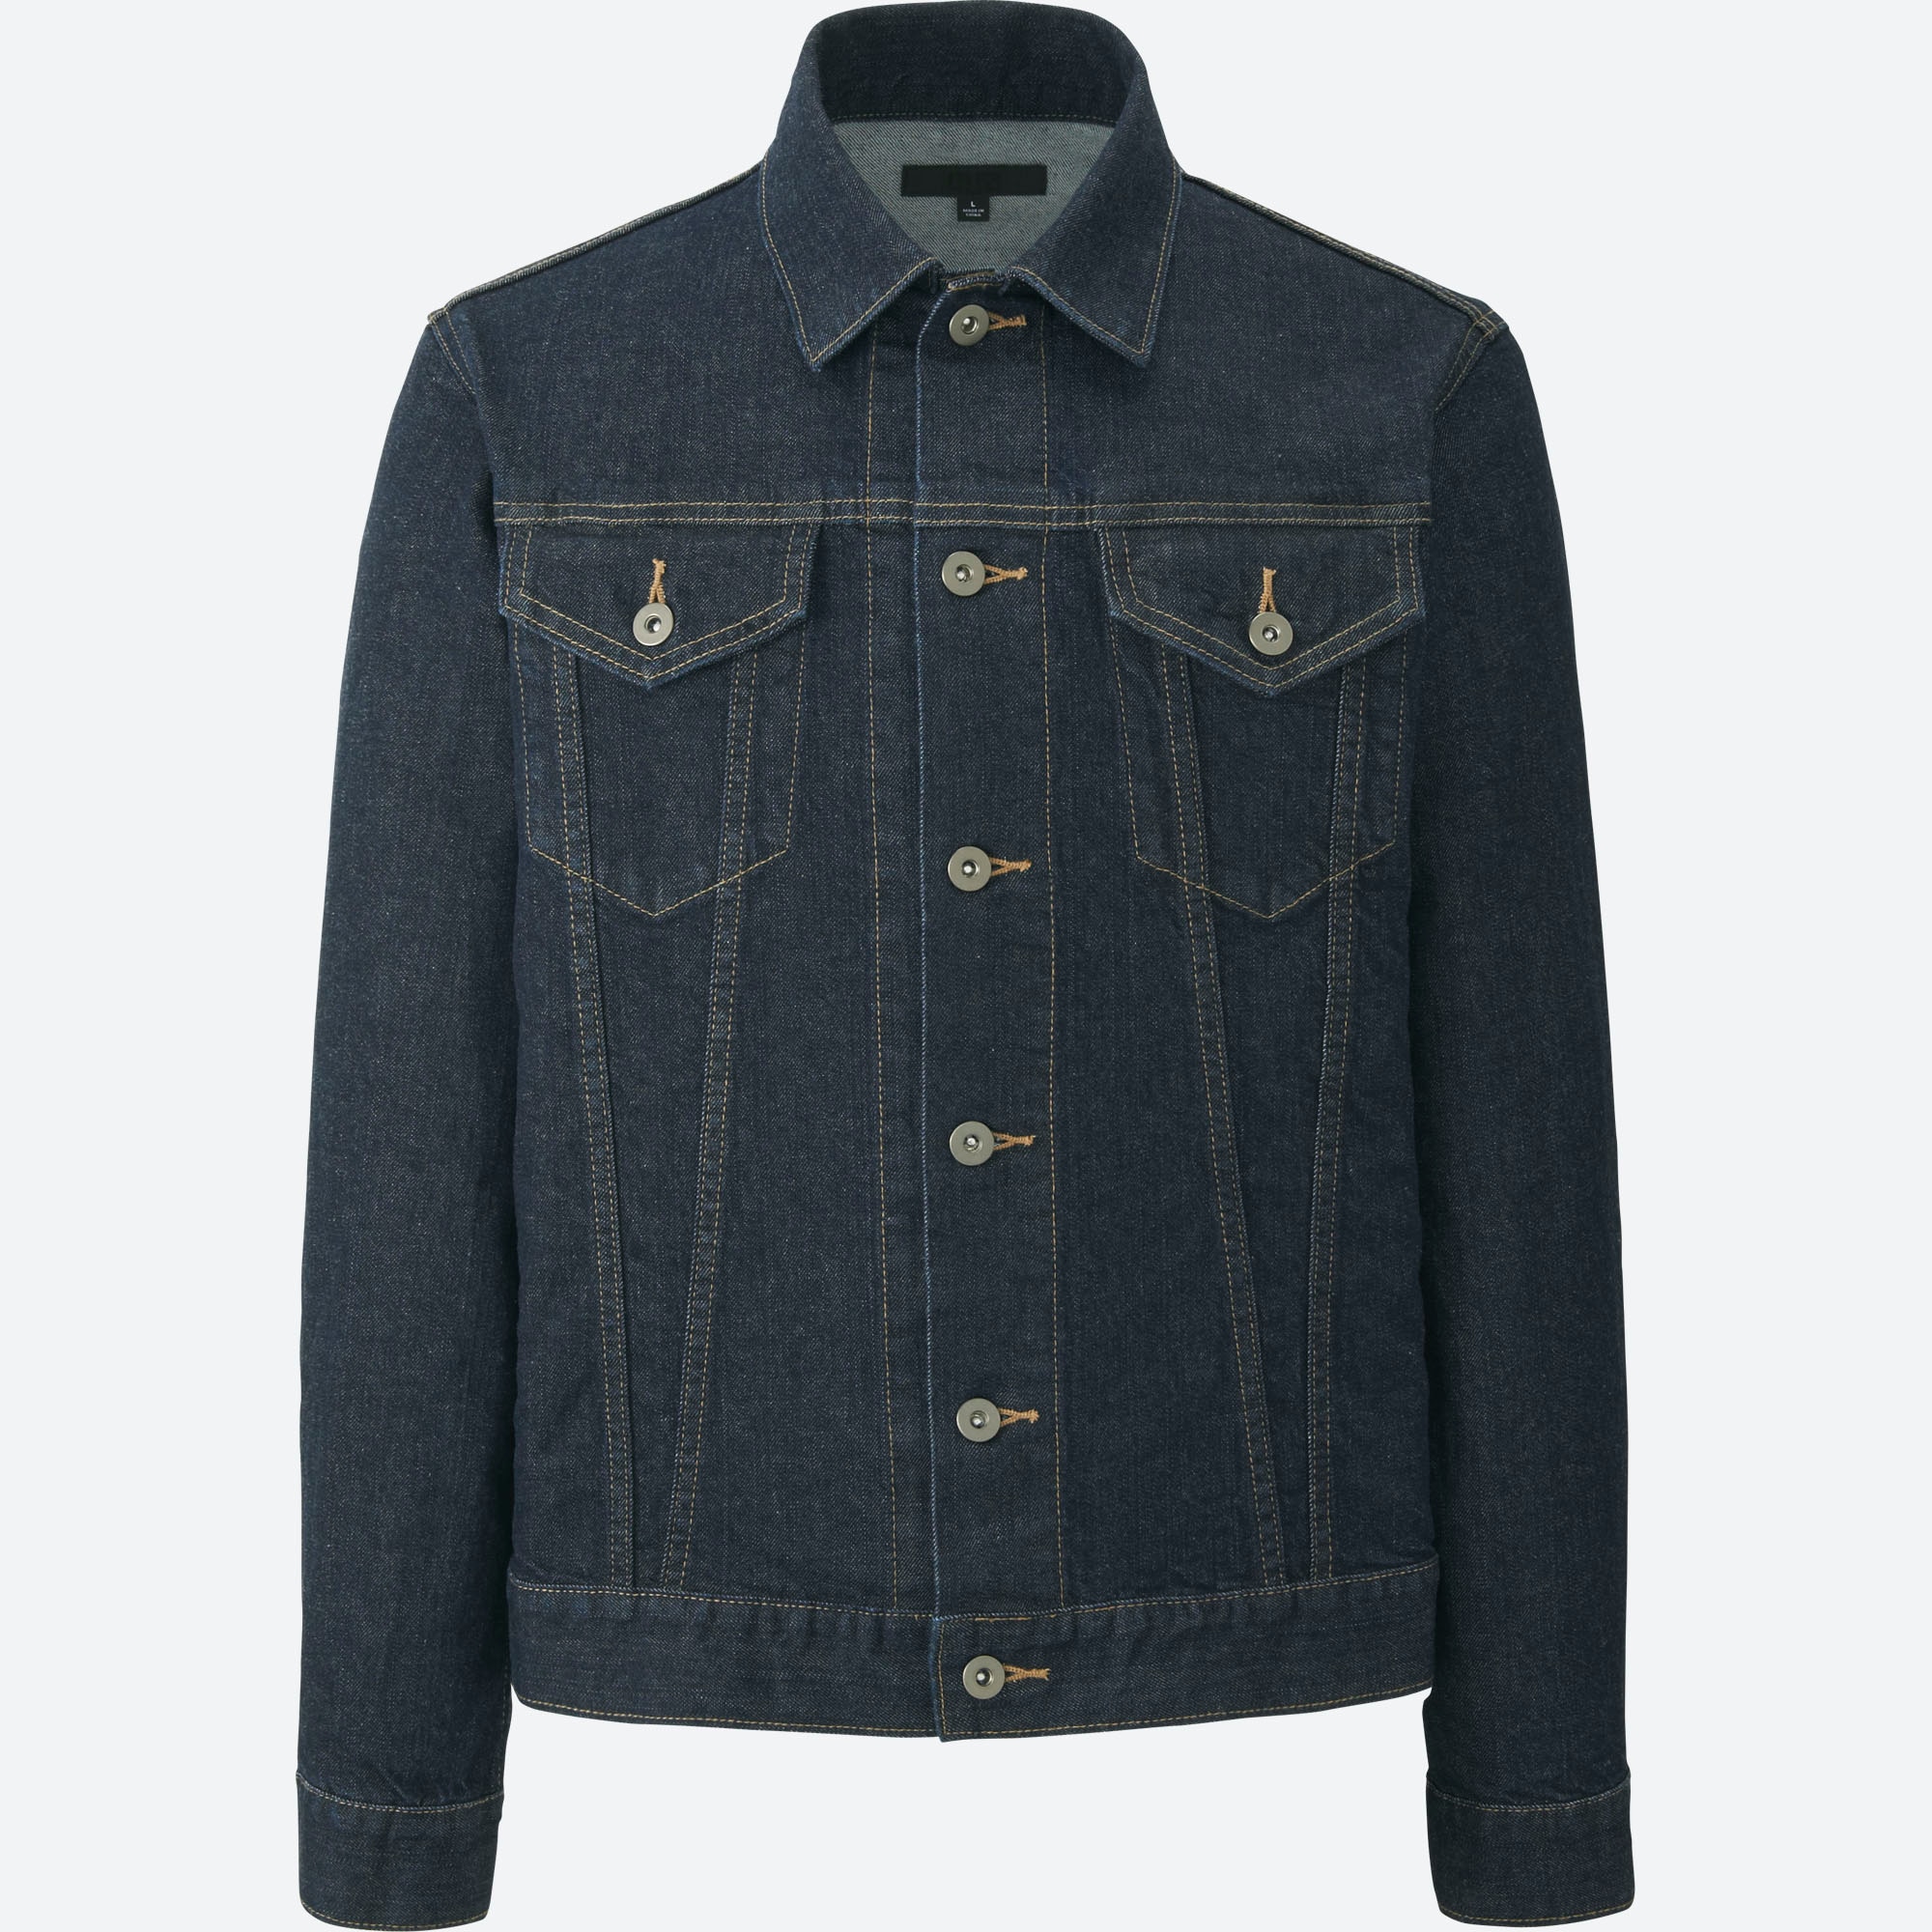 jeans jacket mens low price